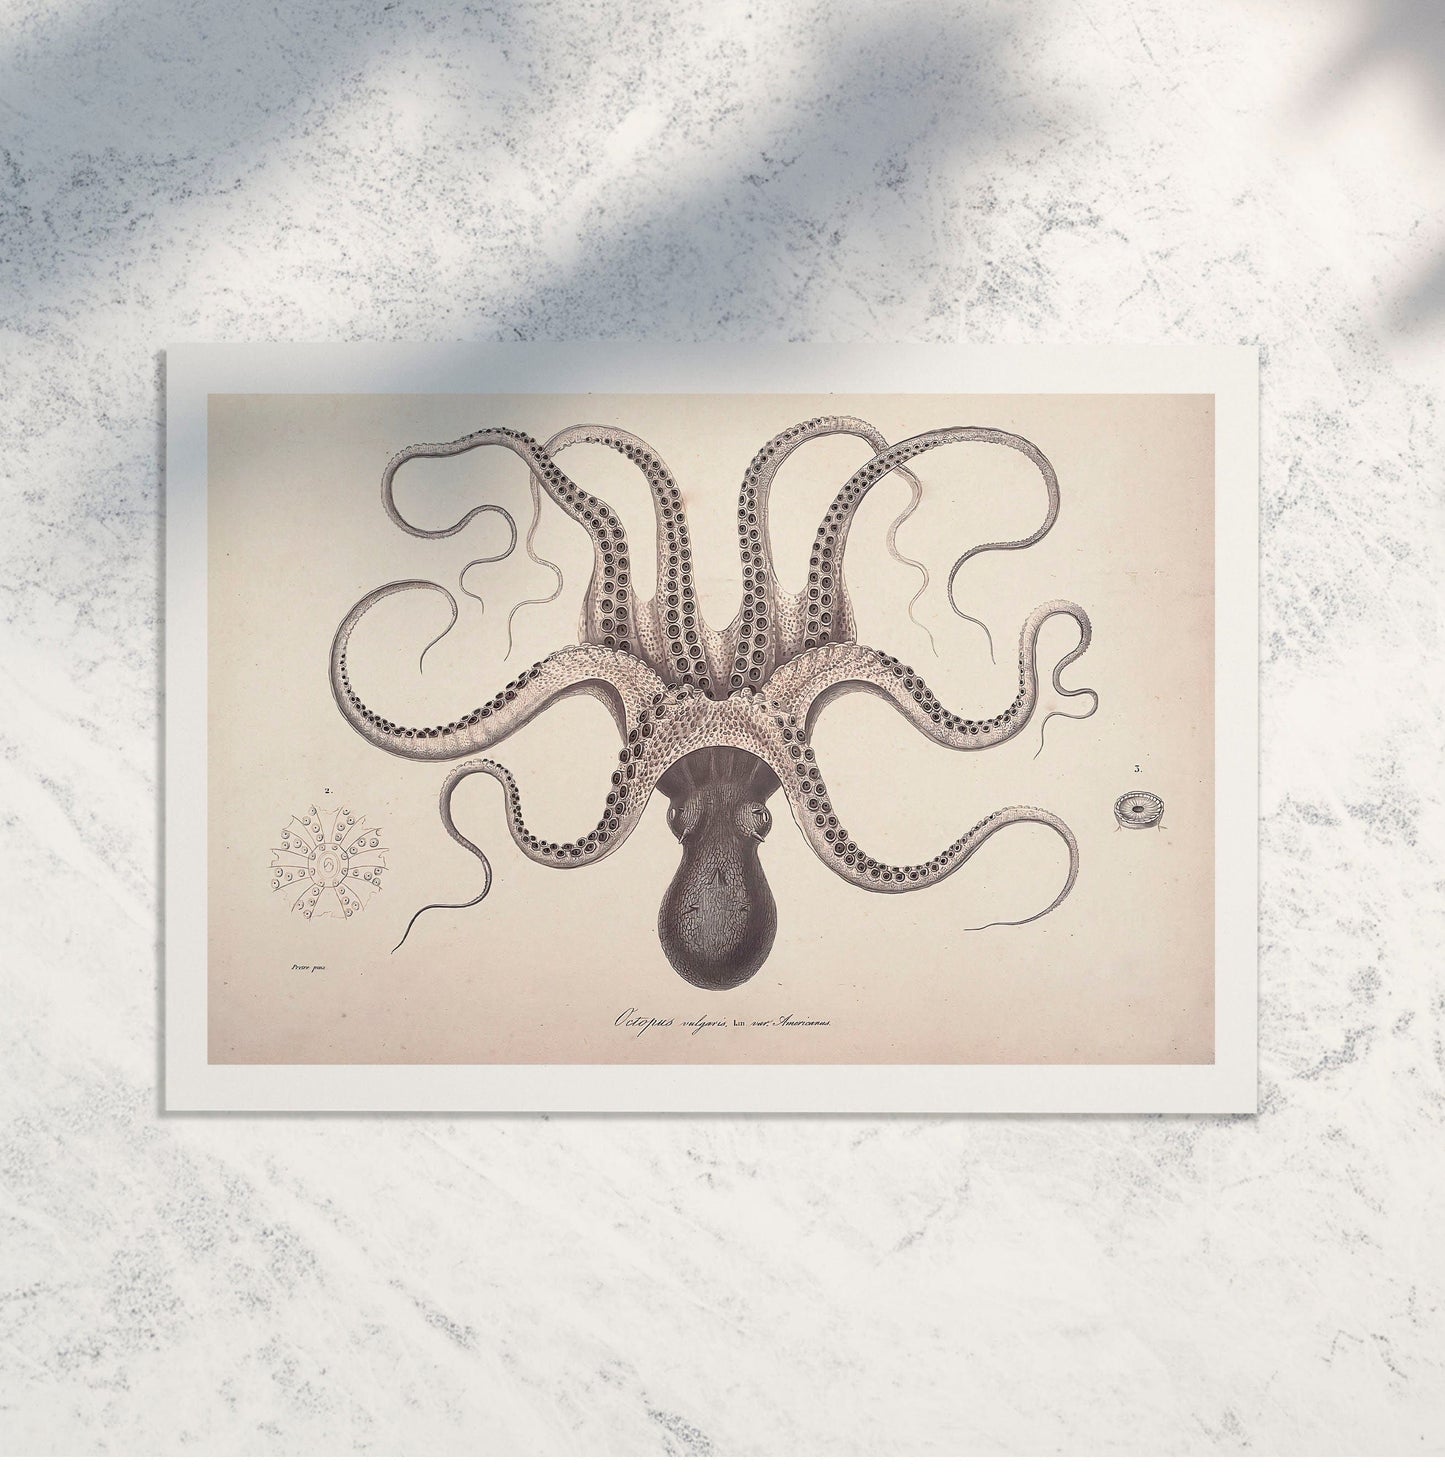 Octopus Vintage scientific print, octopus anatomy scientific print Vintage Animal Prints